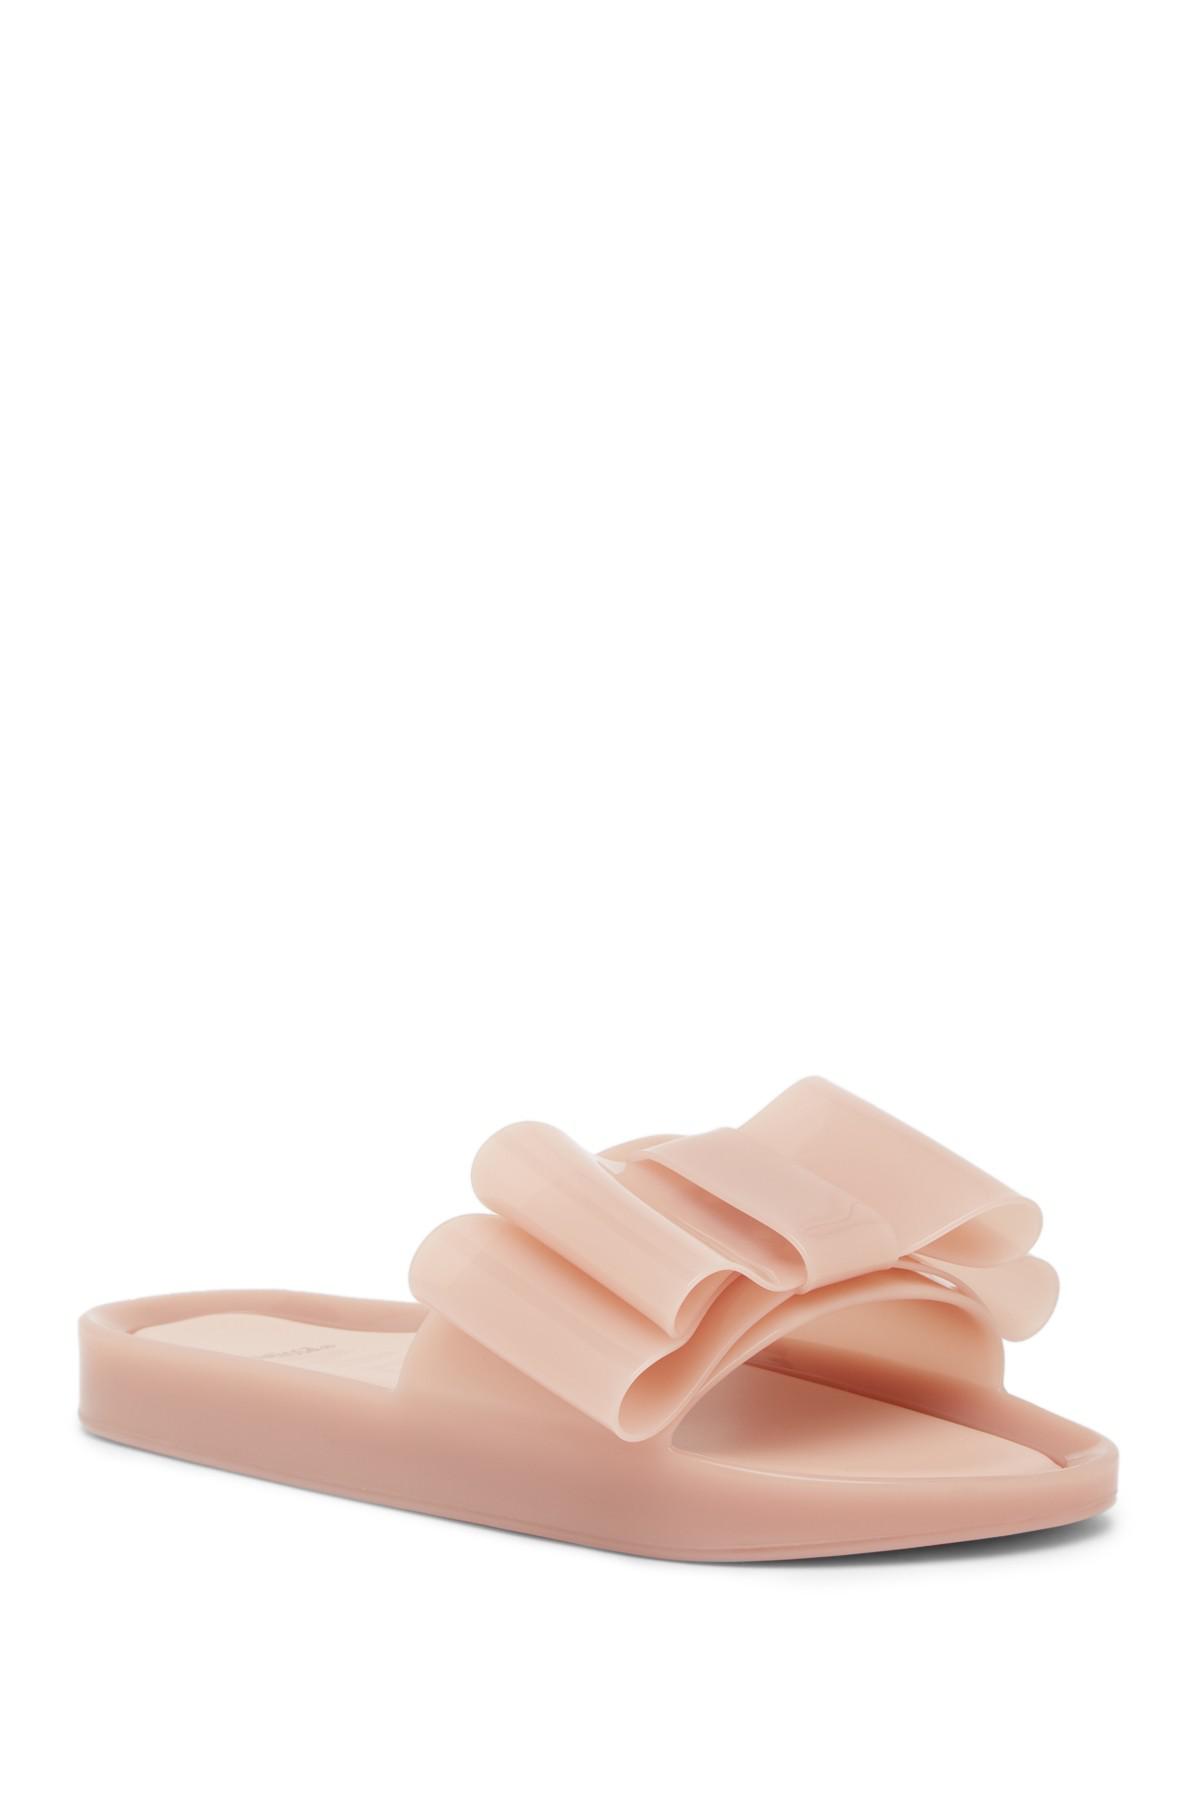 Melissa Beach Bow Jelly Slide Sandal in Pink - Lyst